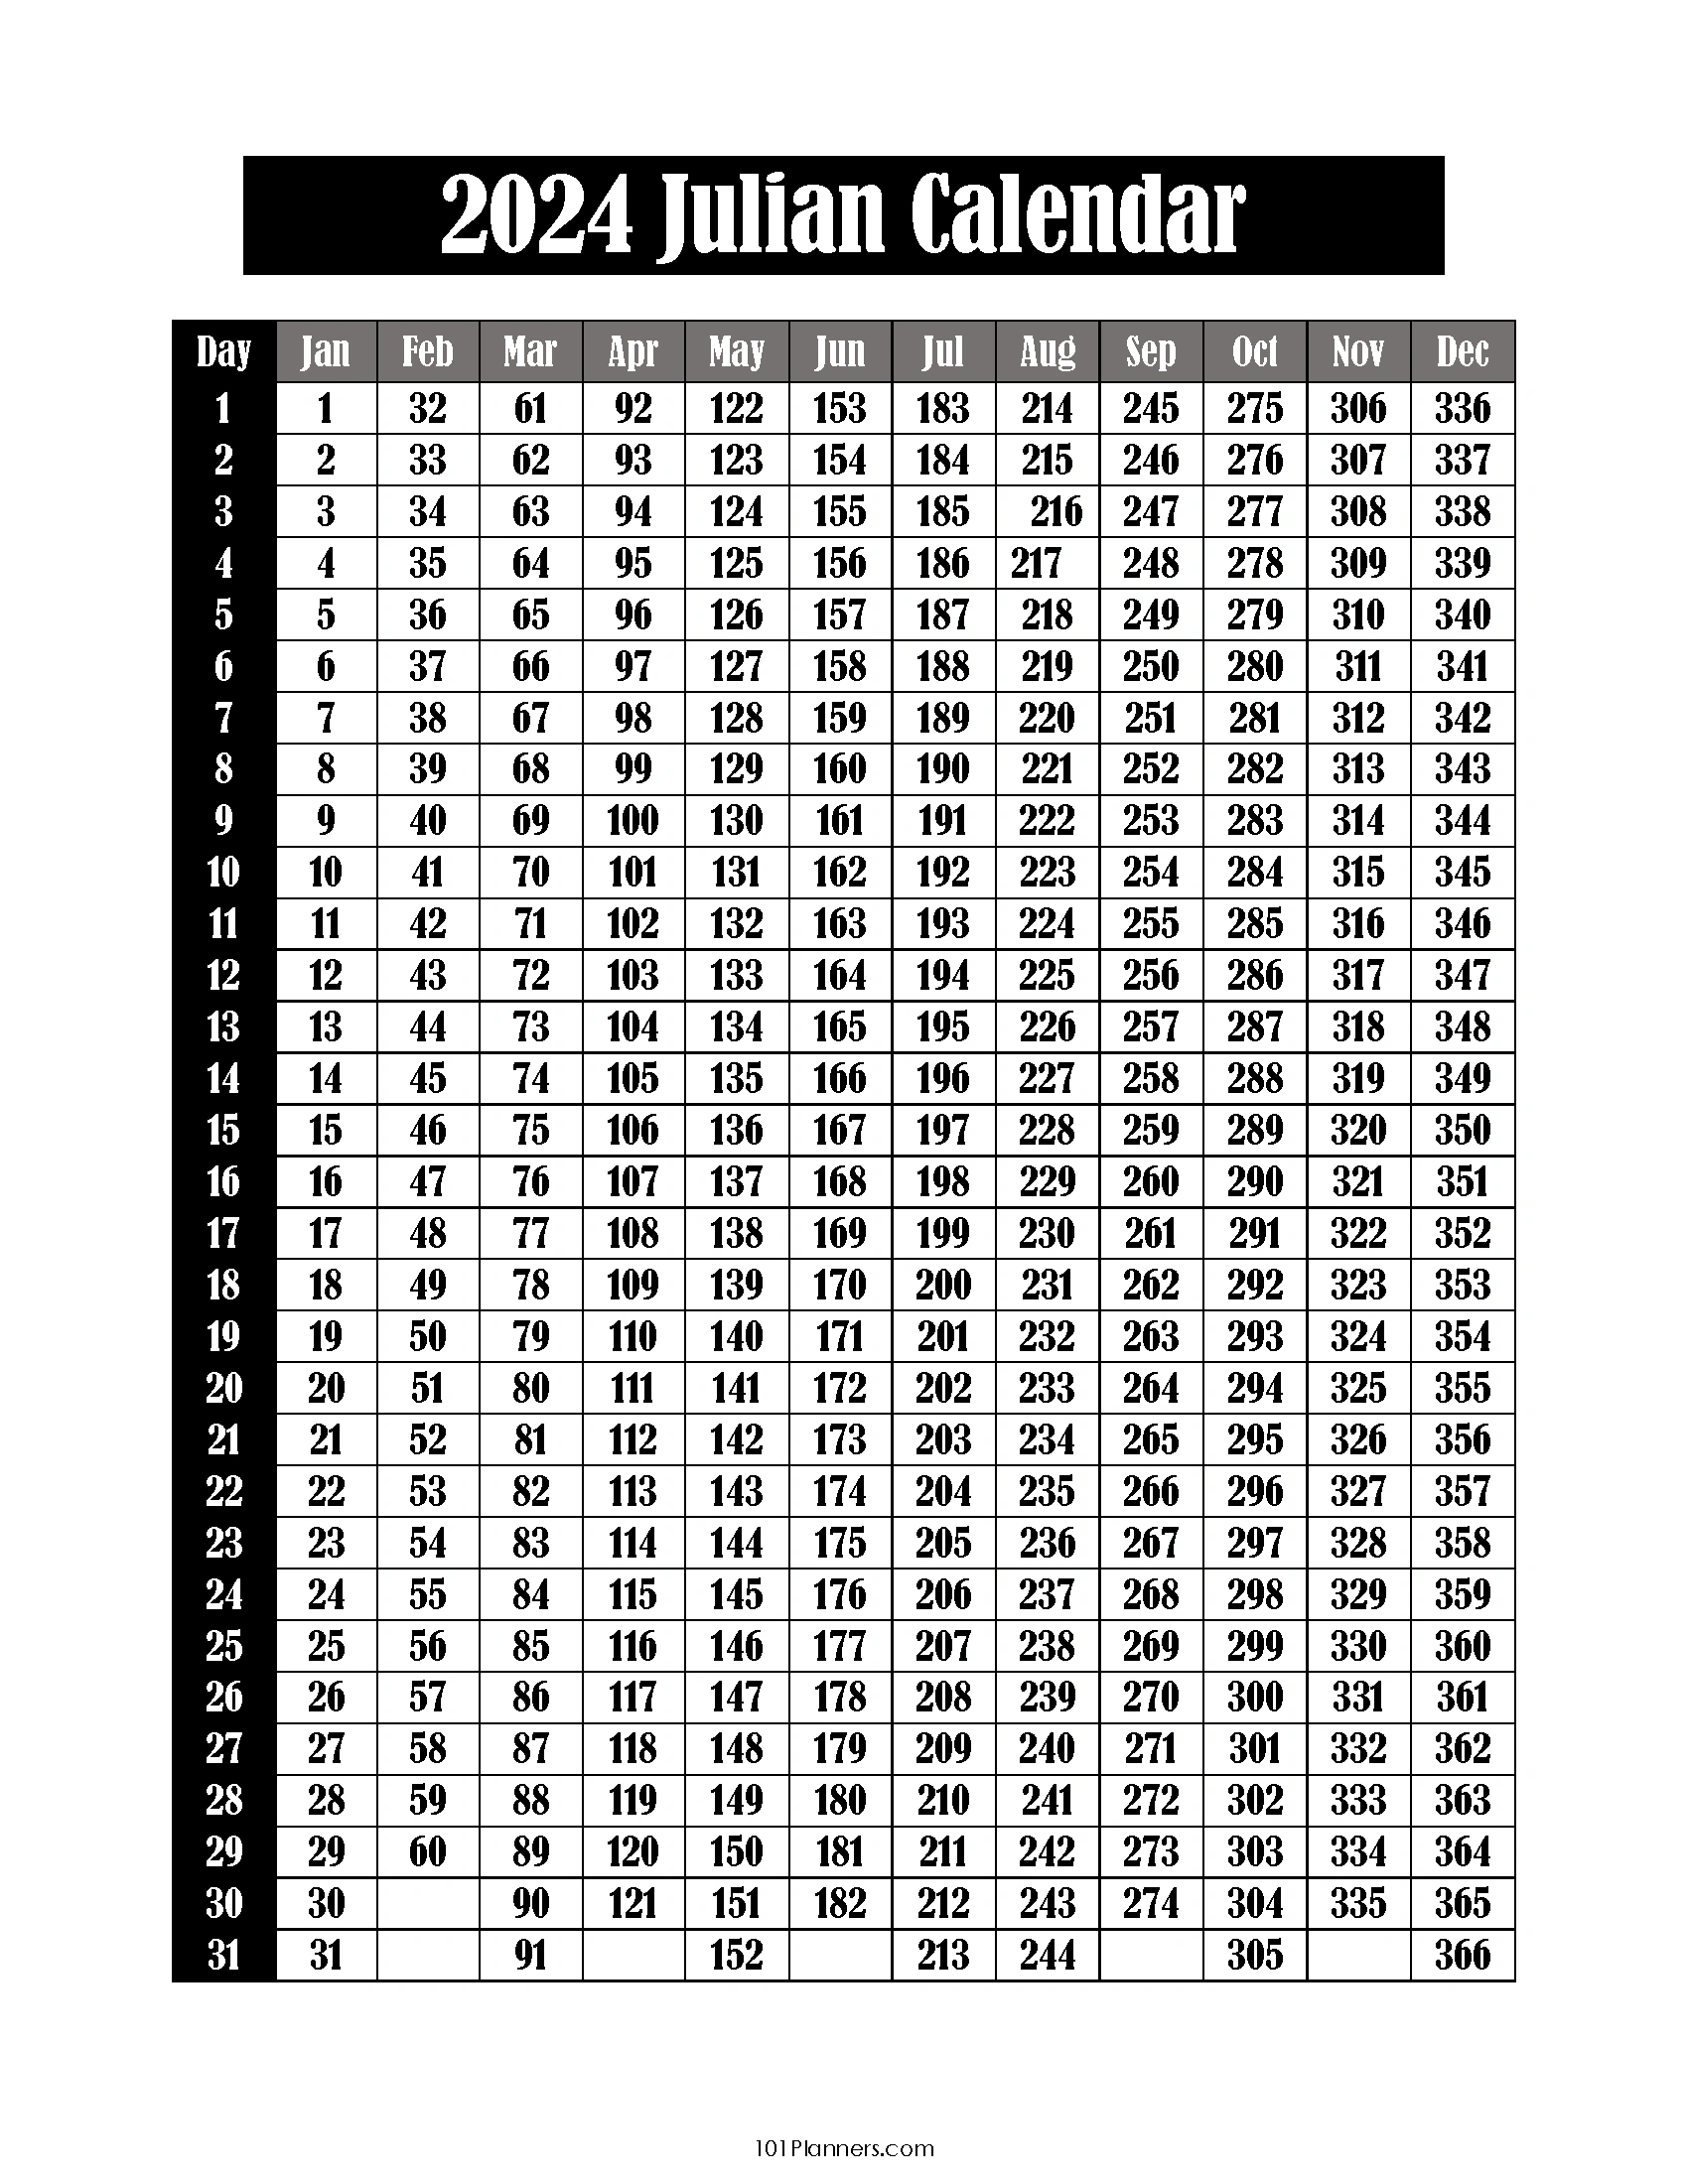 Free Printable Julian Calendar 2024-2032 | Julian Date Today with Julian Date Code Calendar 2024